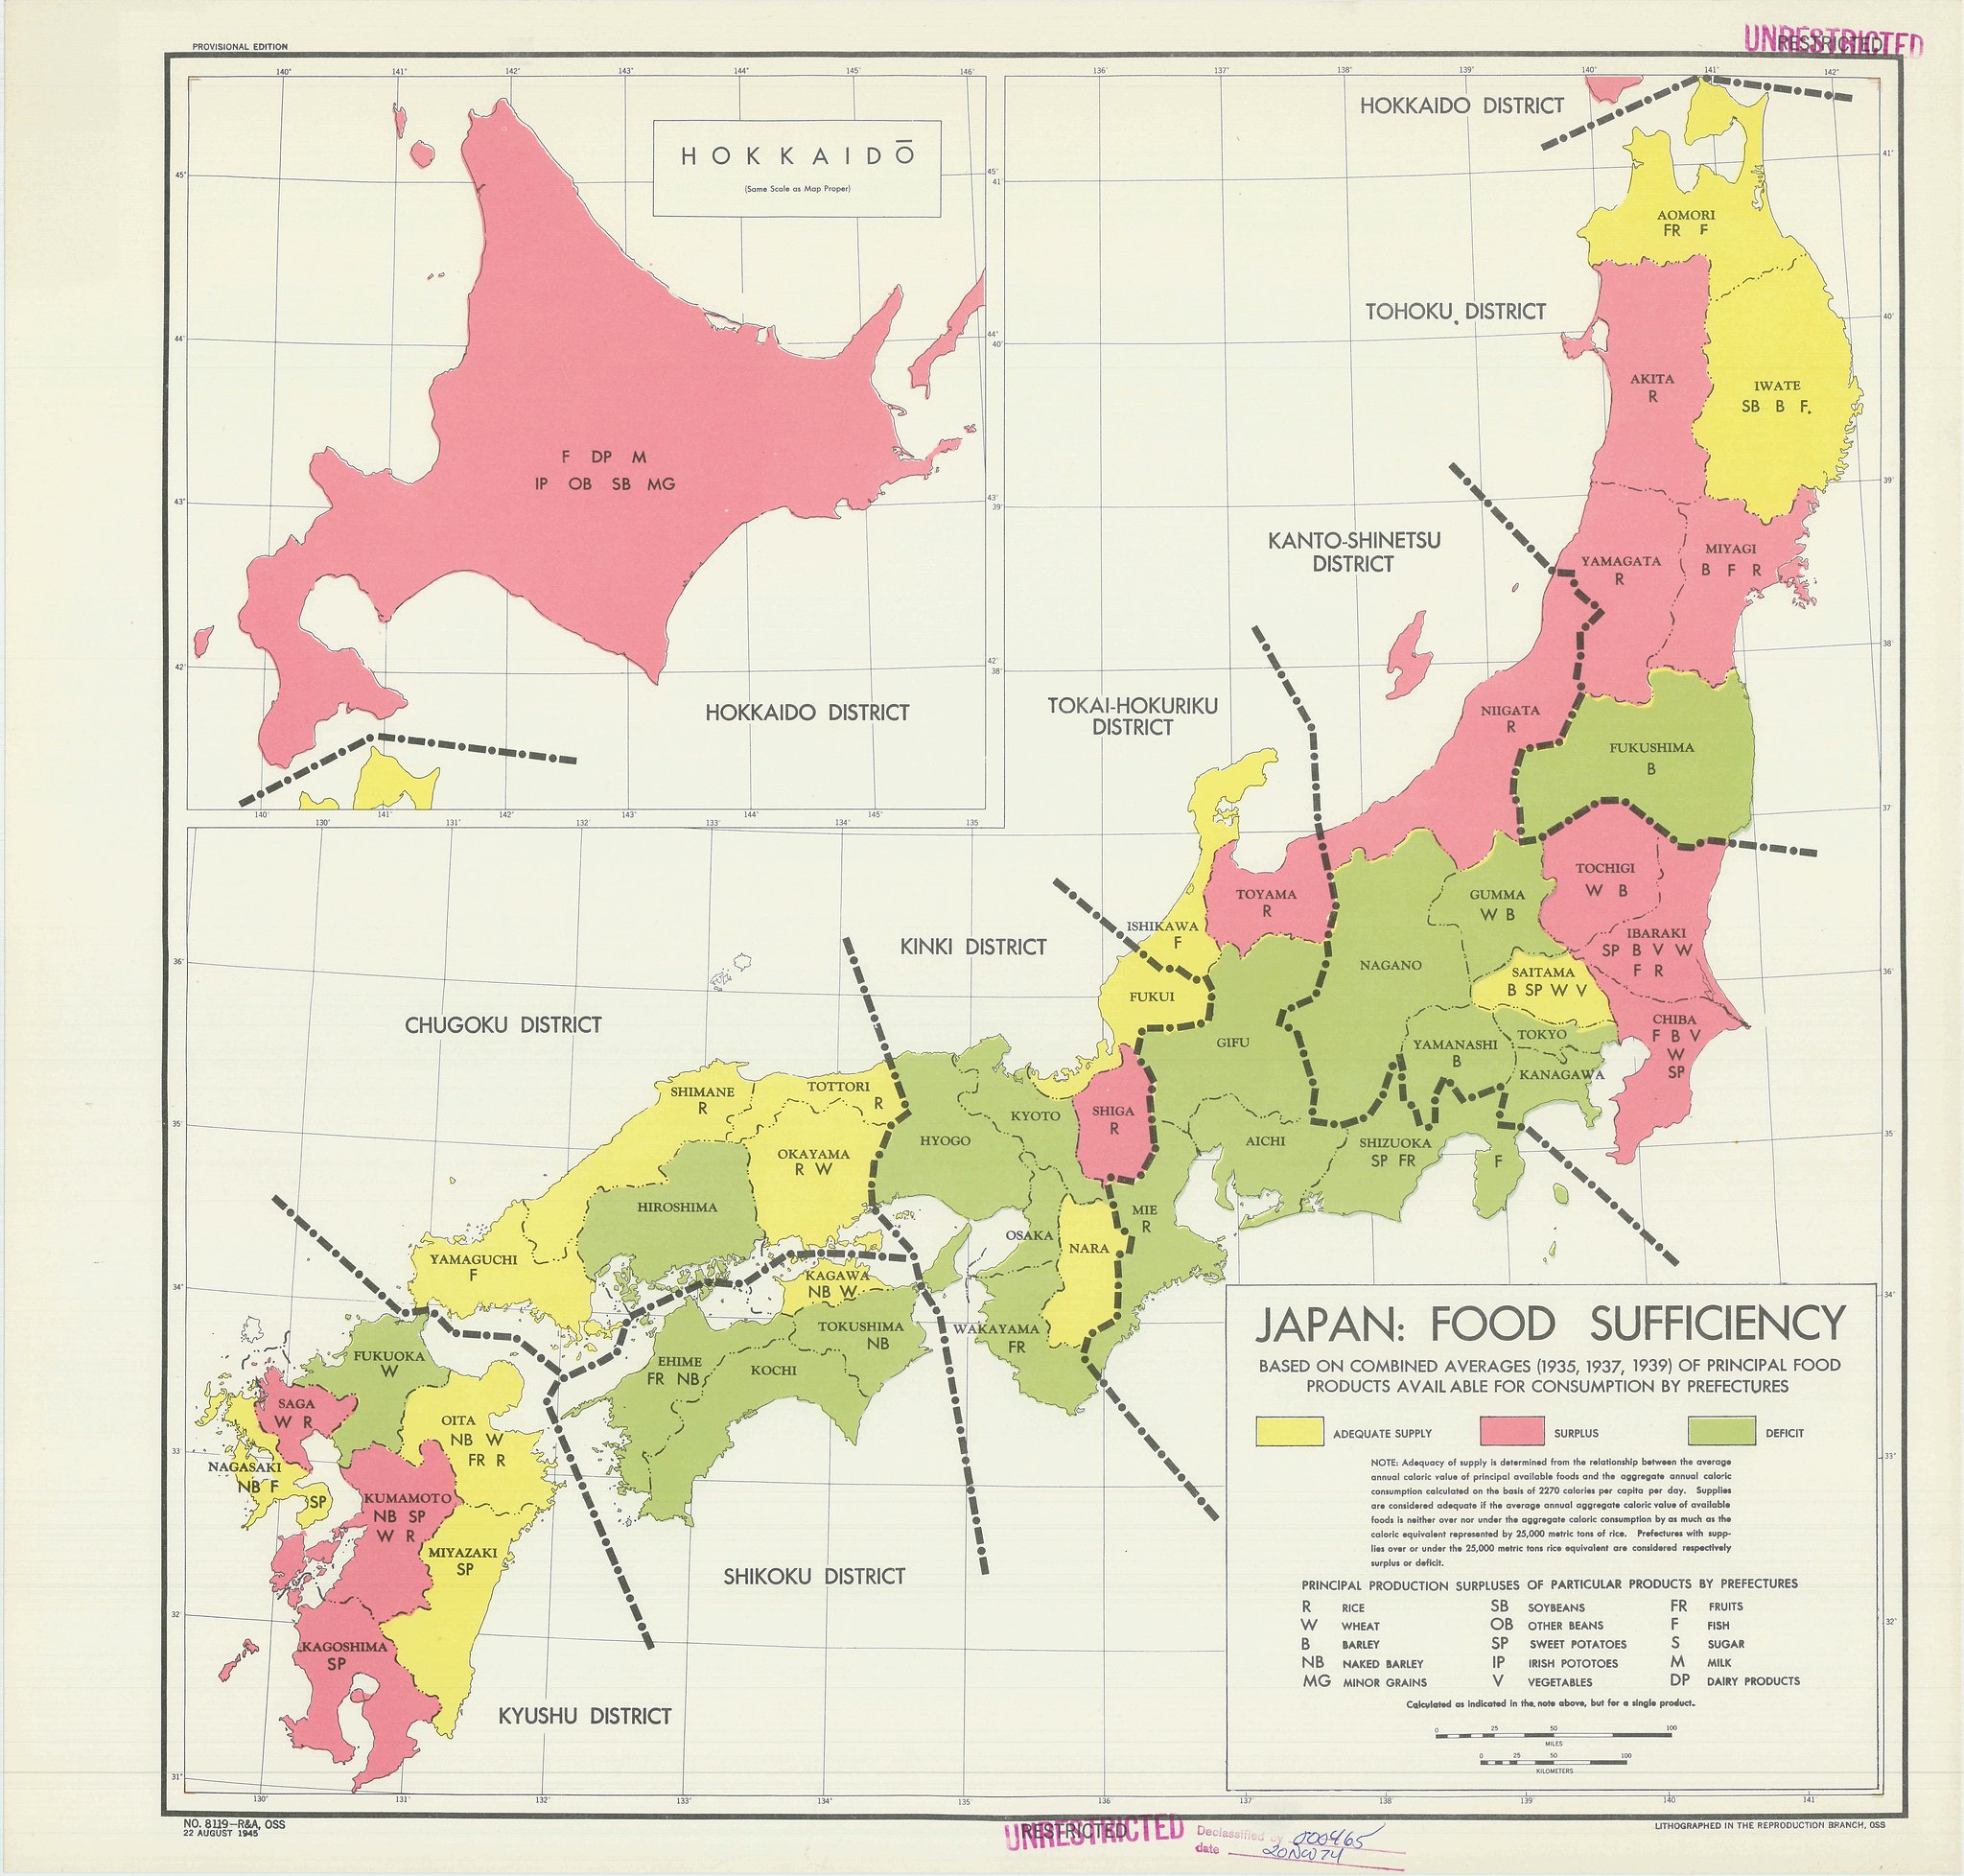 1945 Japan Food Sufficiency